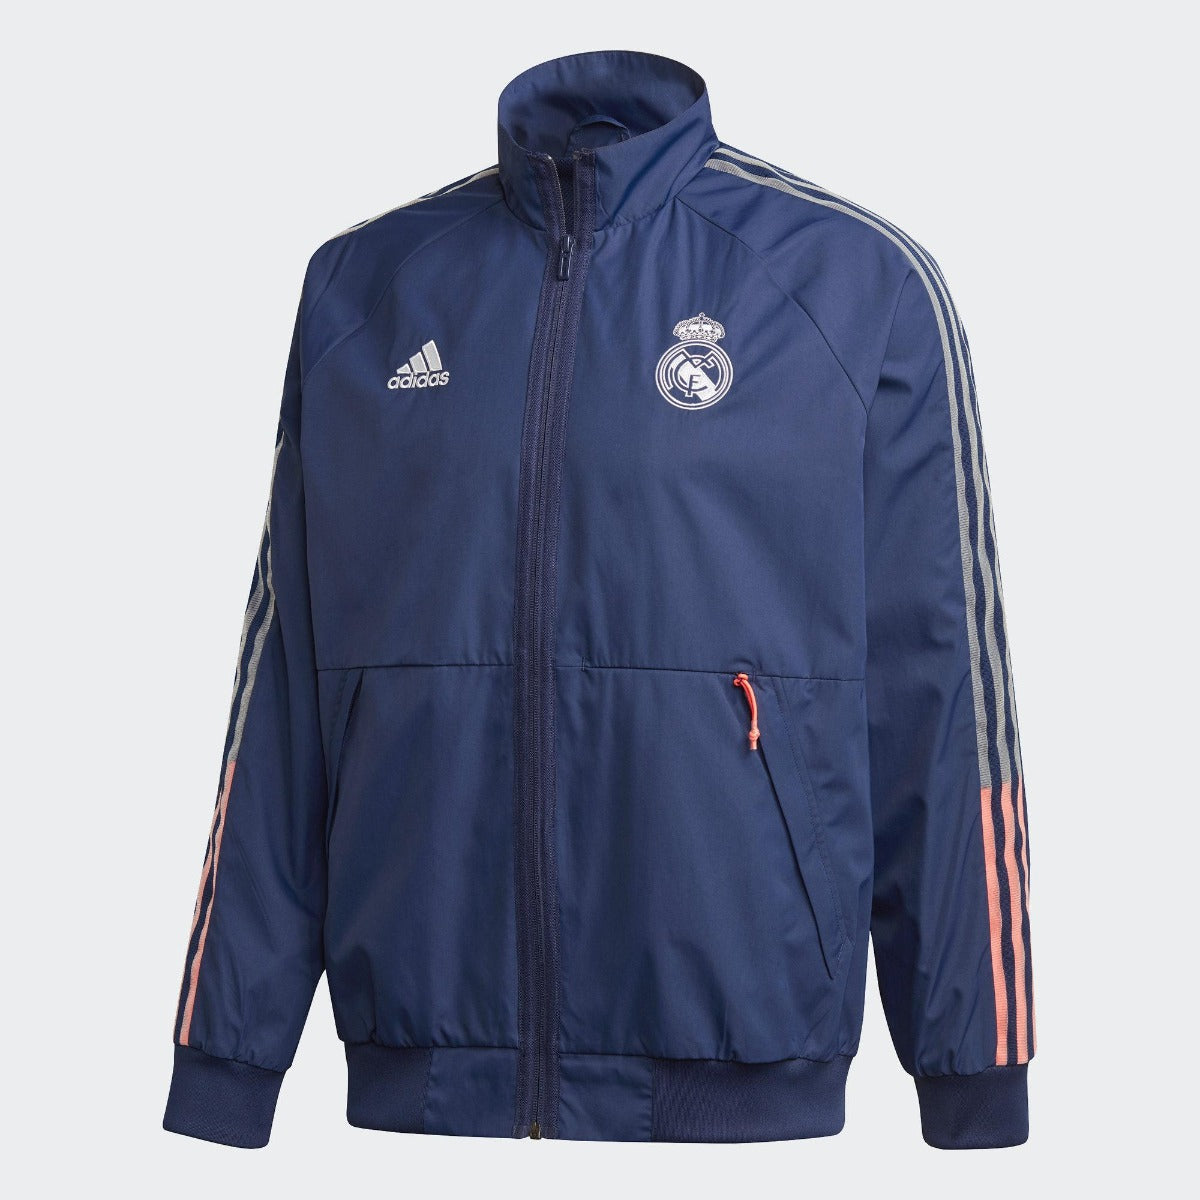 Adidas 2020-21 Real Madrid Anthem Jacket - Navy